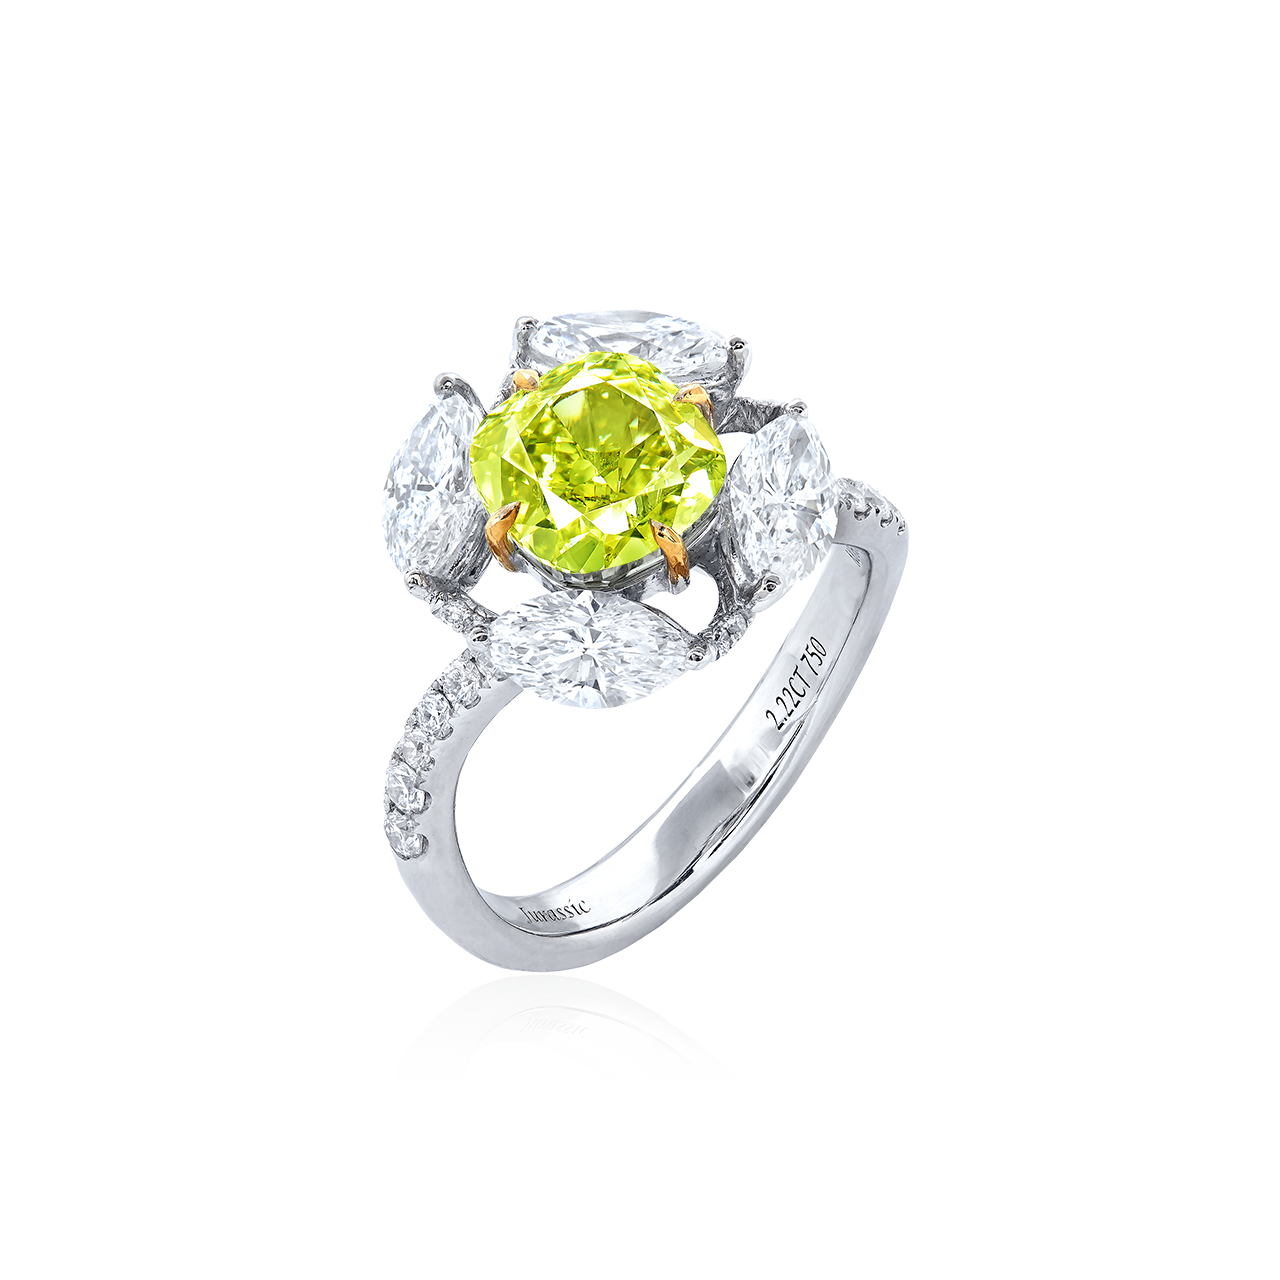 GIA 2.22克拉 濃彩黃綠彩鑽鑽石戒
FANCY INTENSE YELLOW-GREEN 
COLOURED DIAMOND AND DIAMOND RING